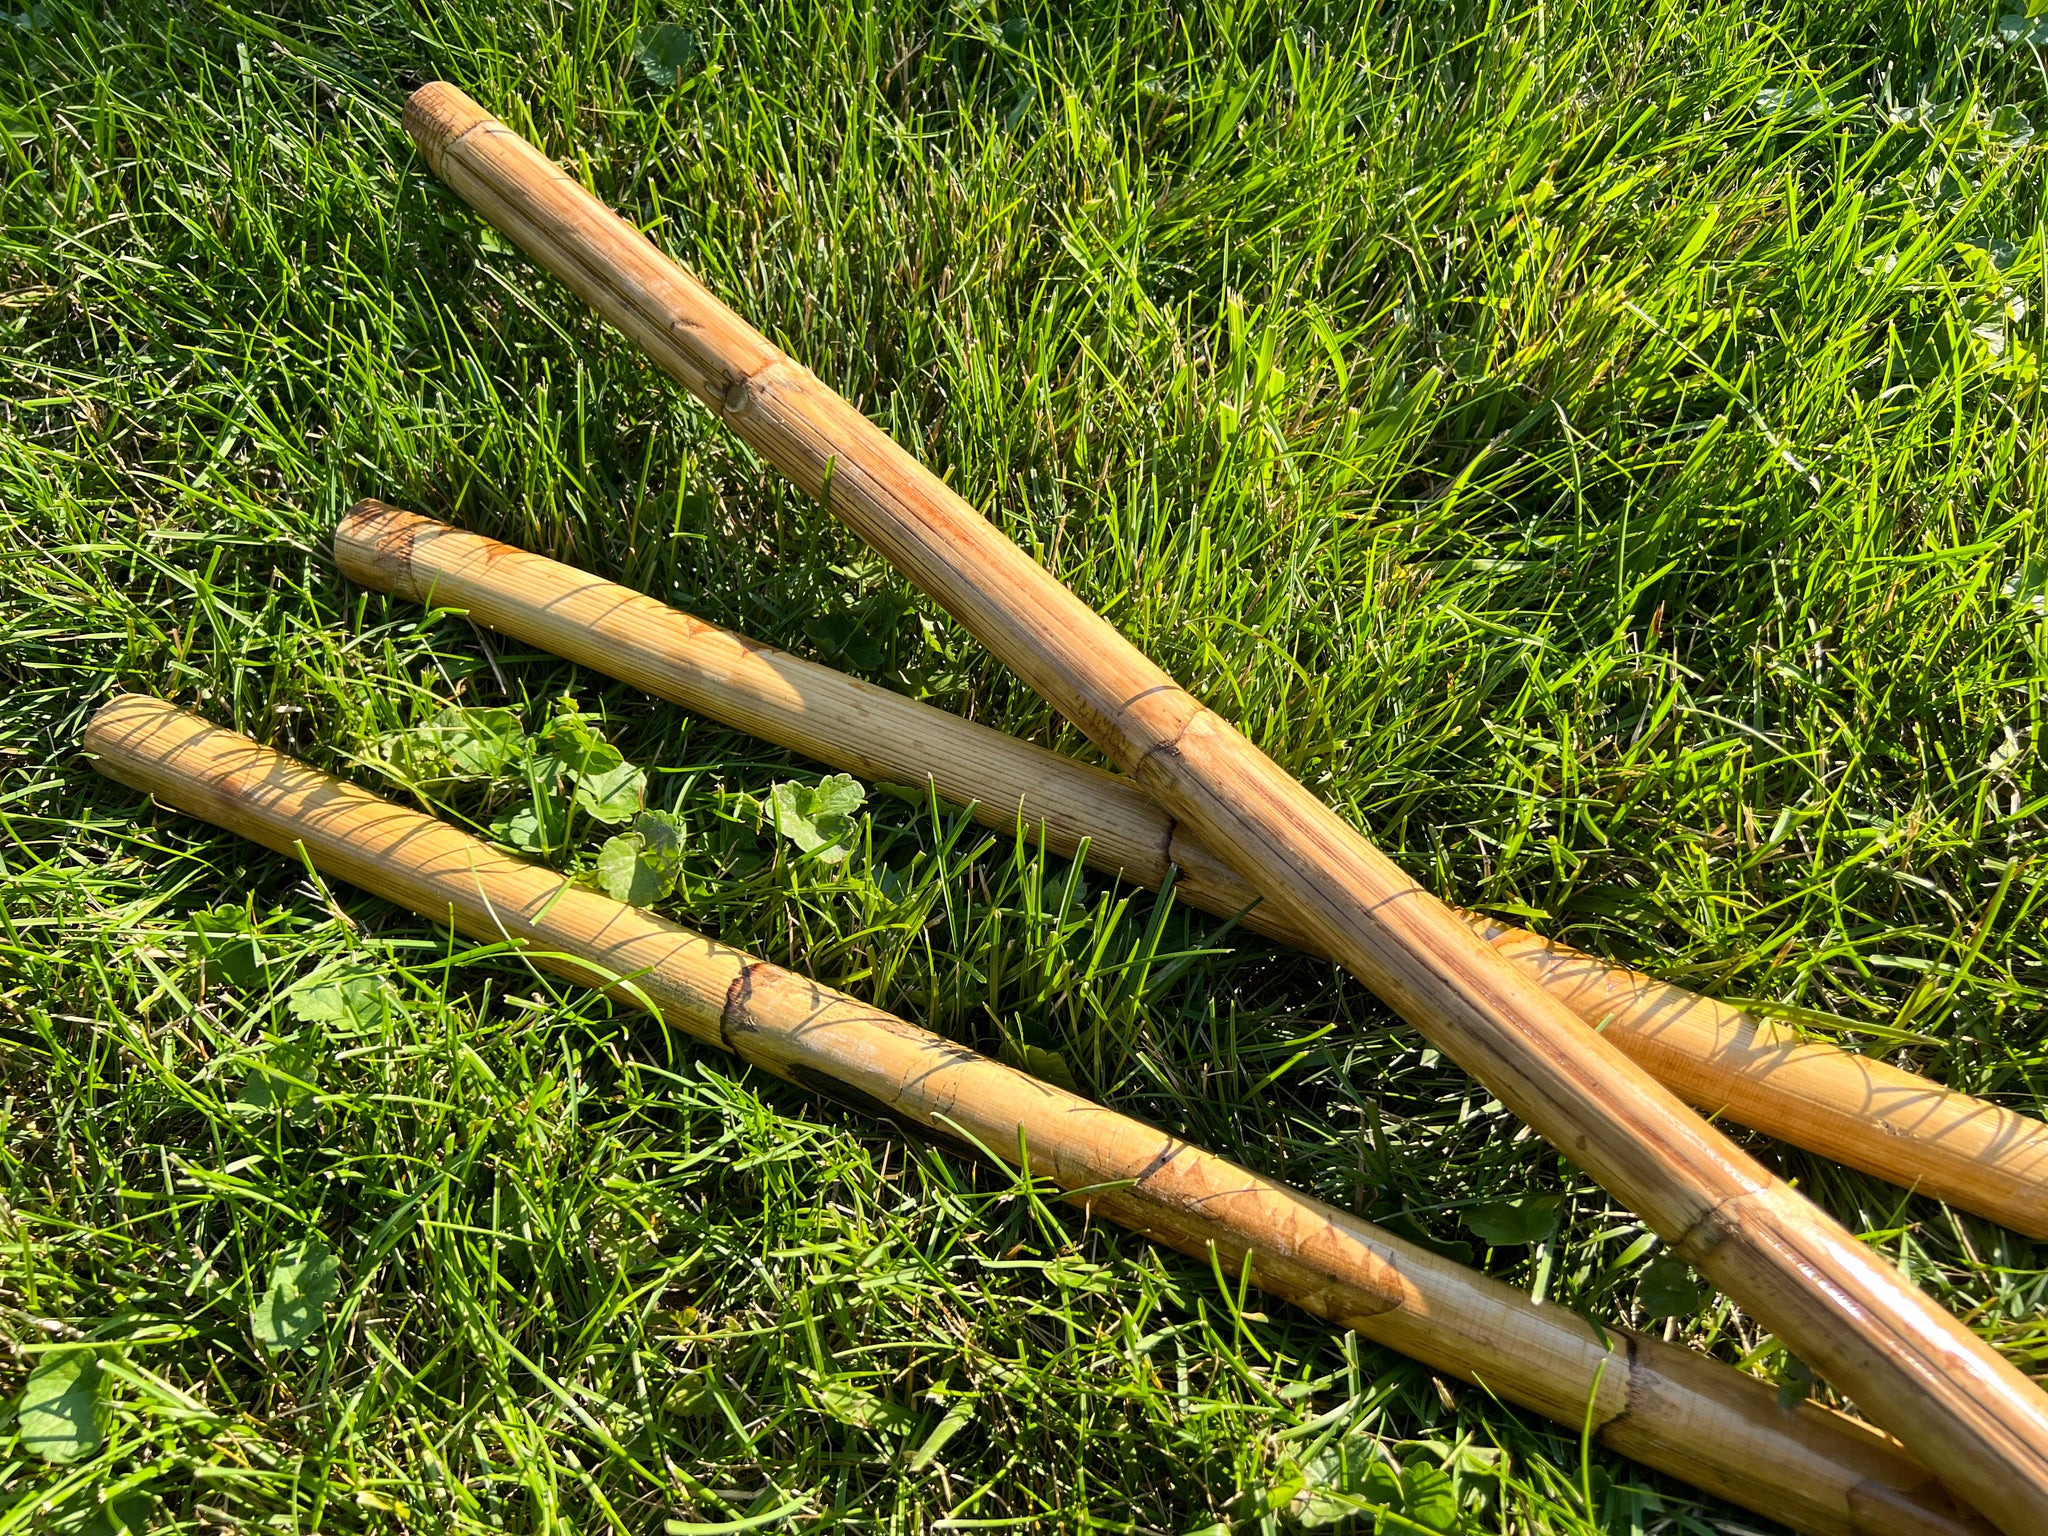 Sticks and Staffs